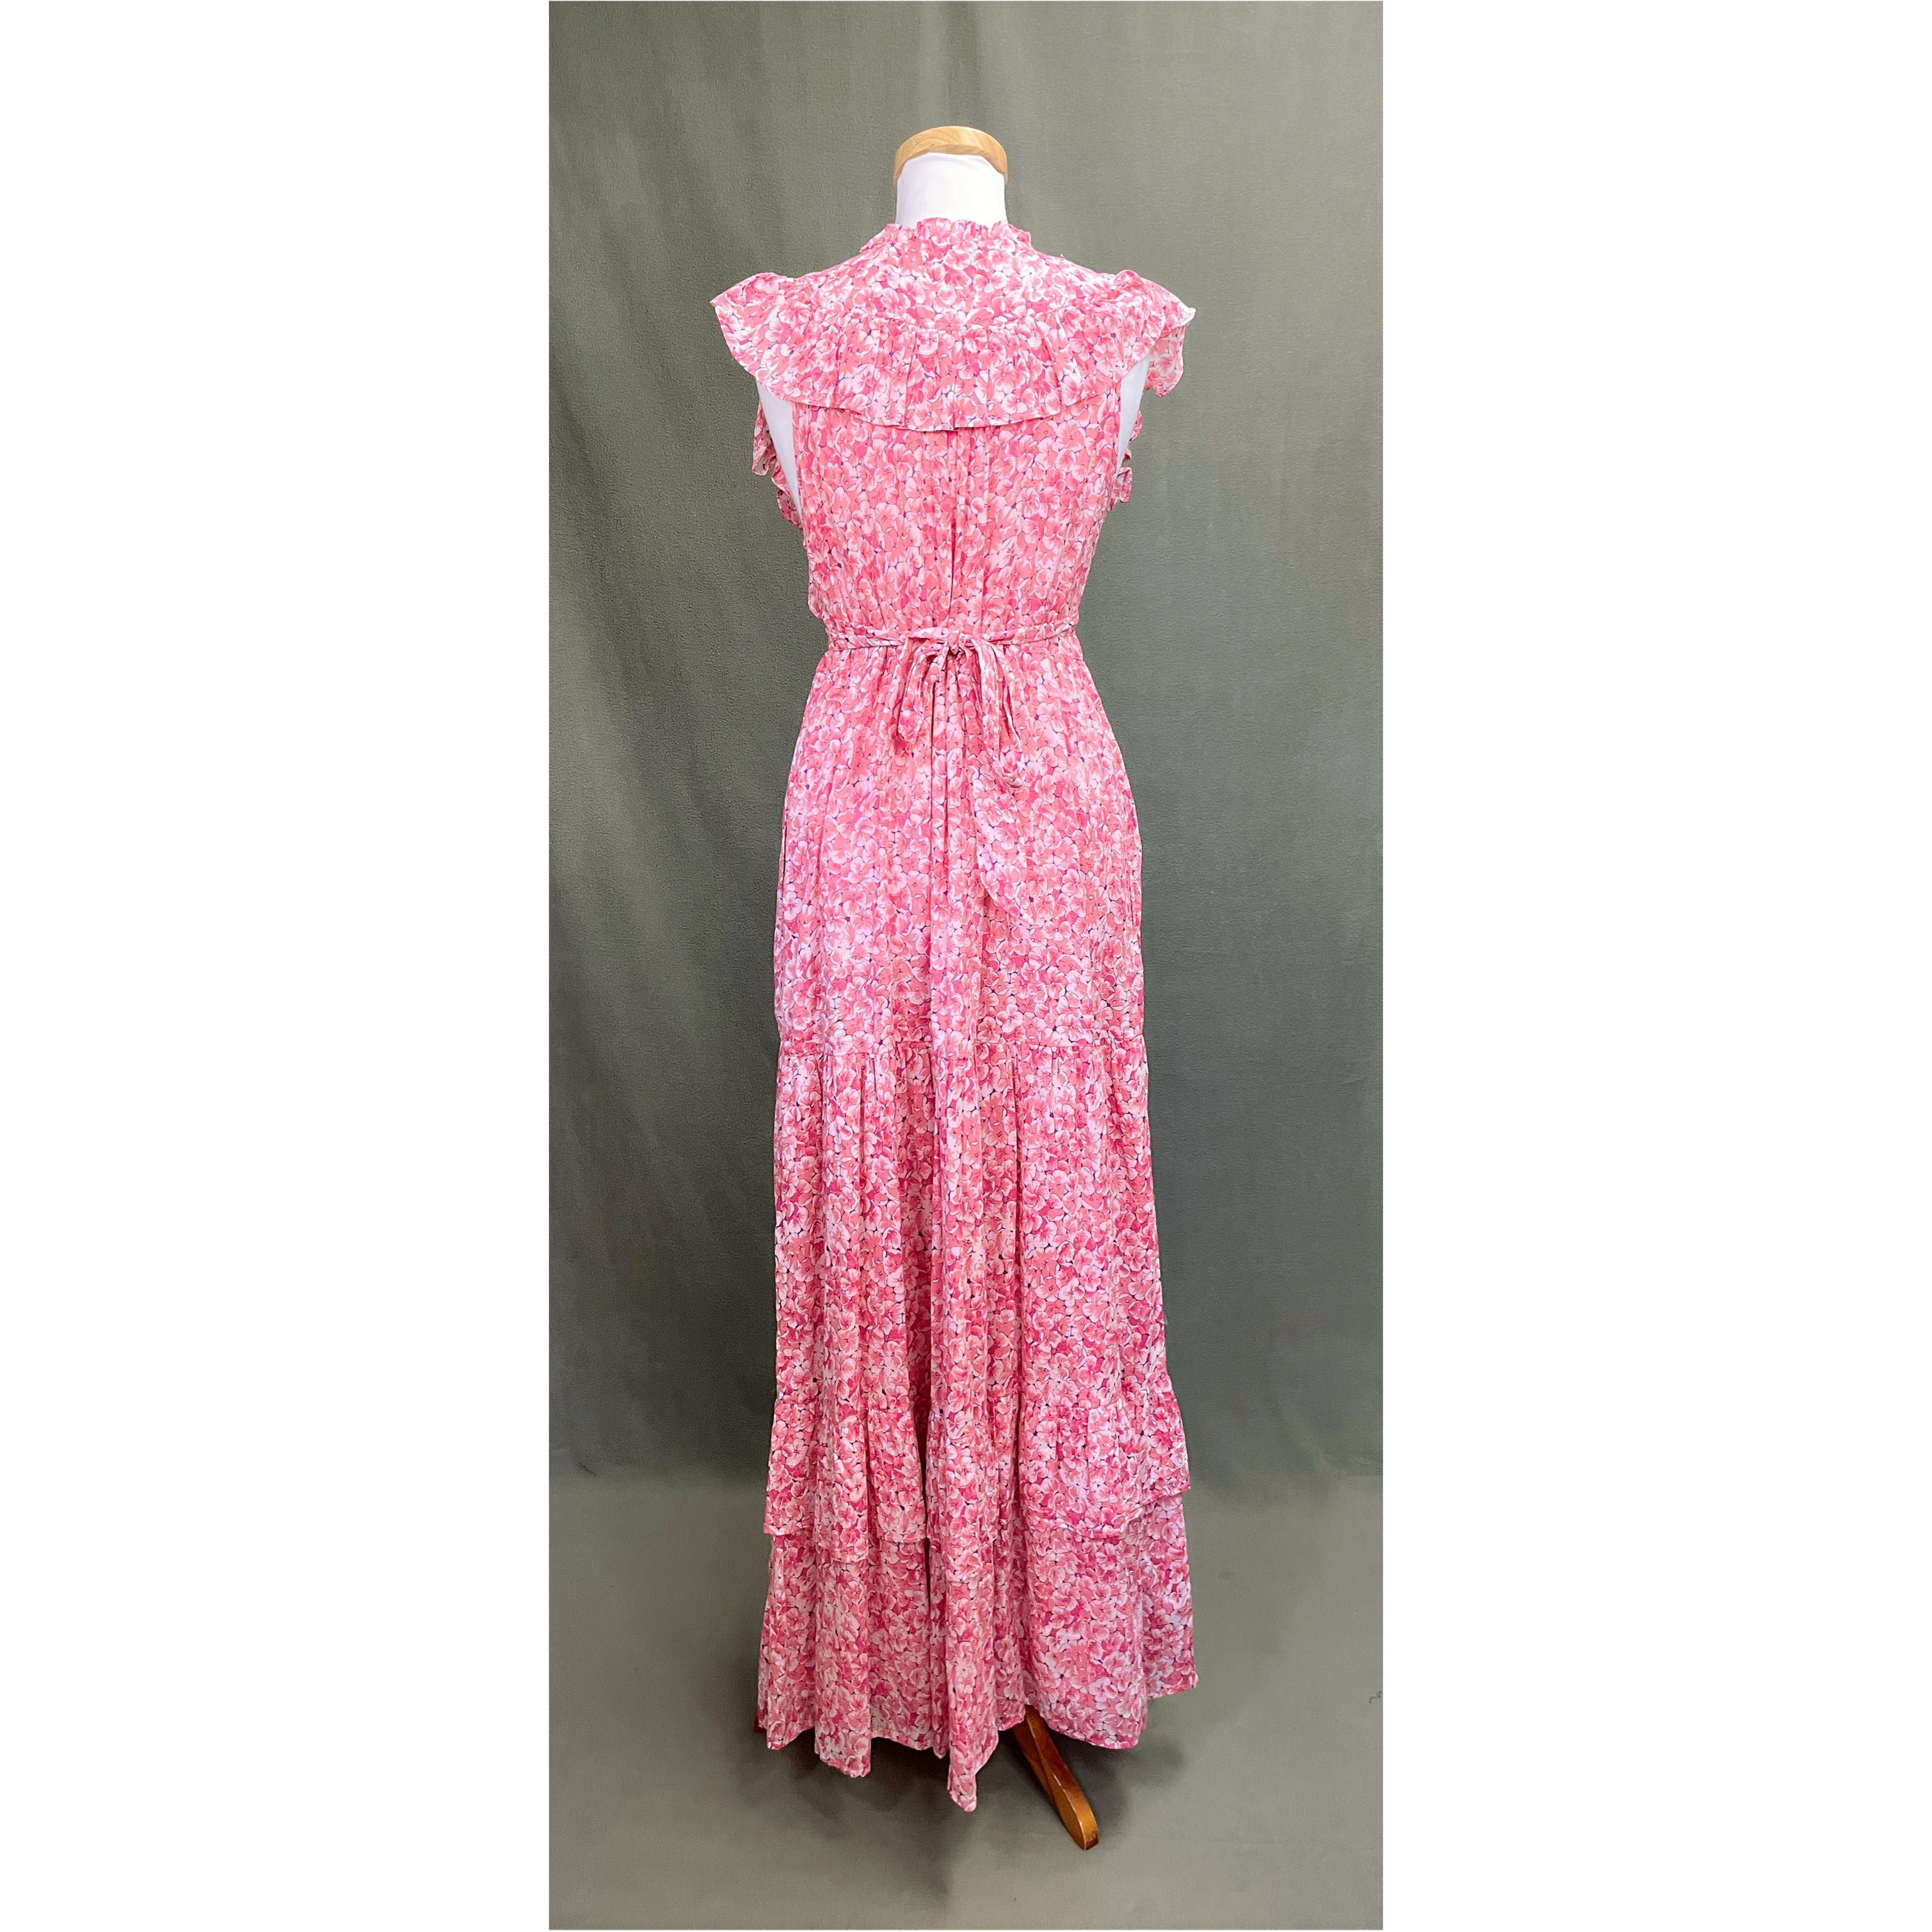 Banjanan pink floral maxi dress, size M